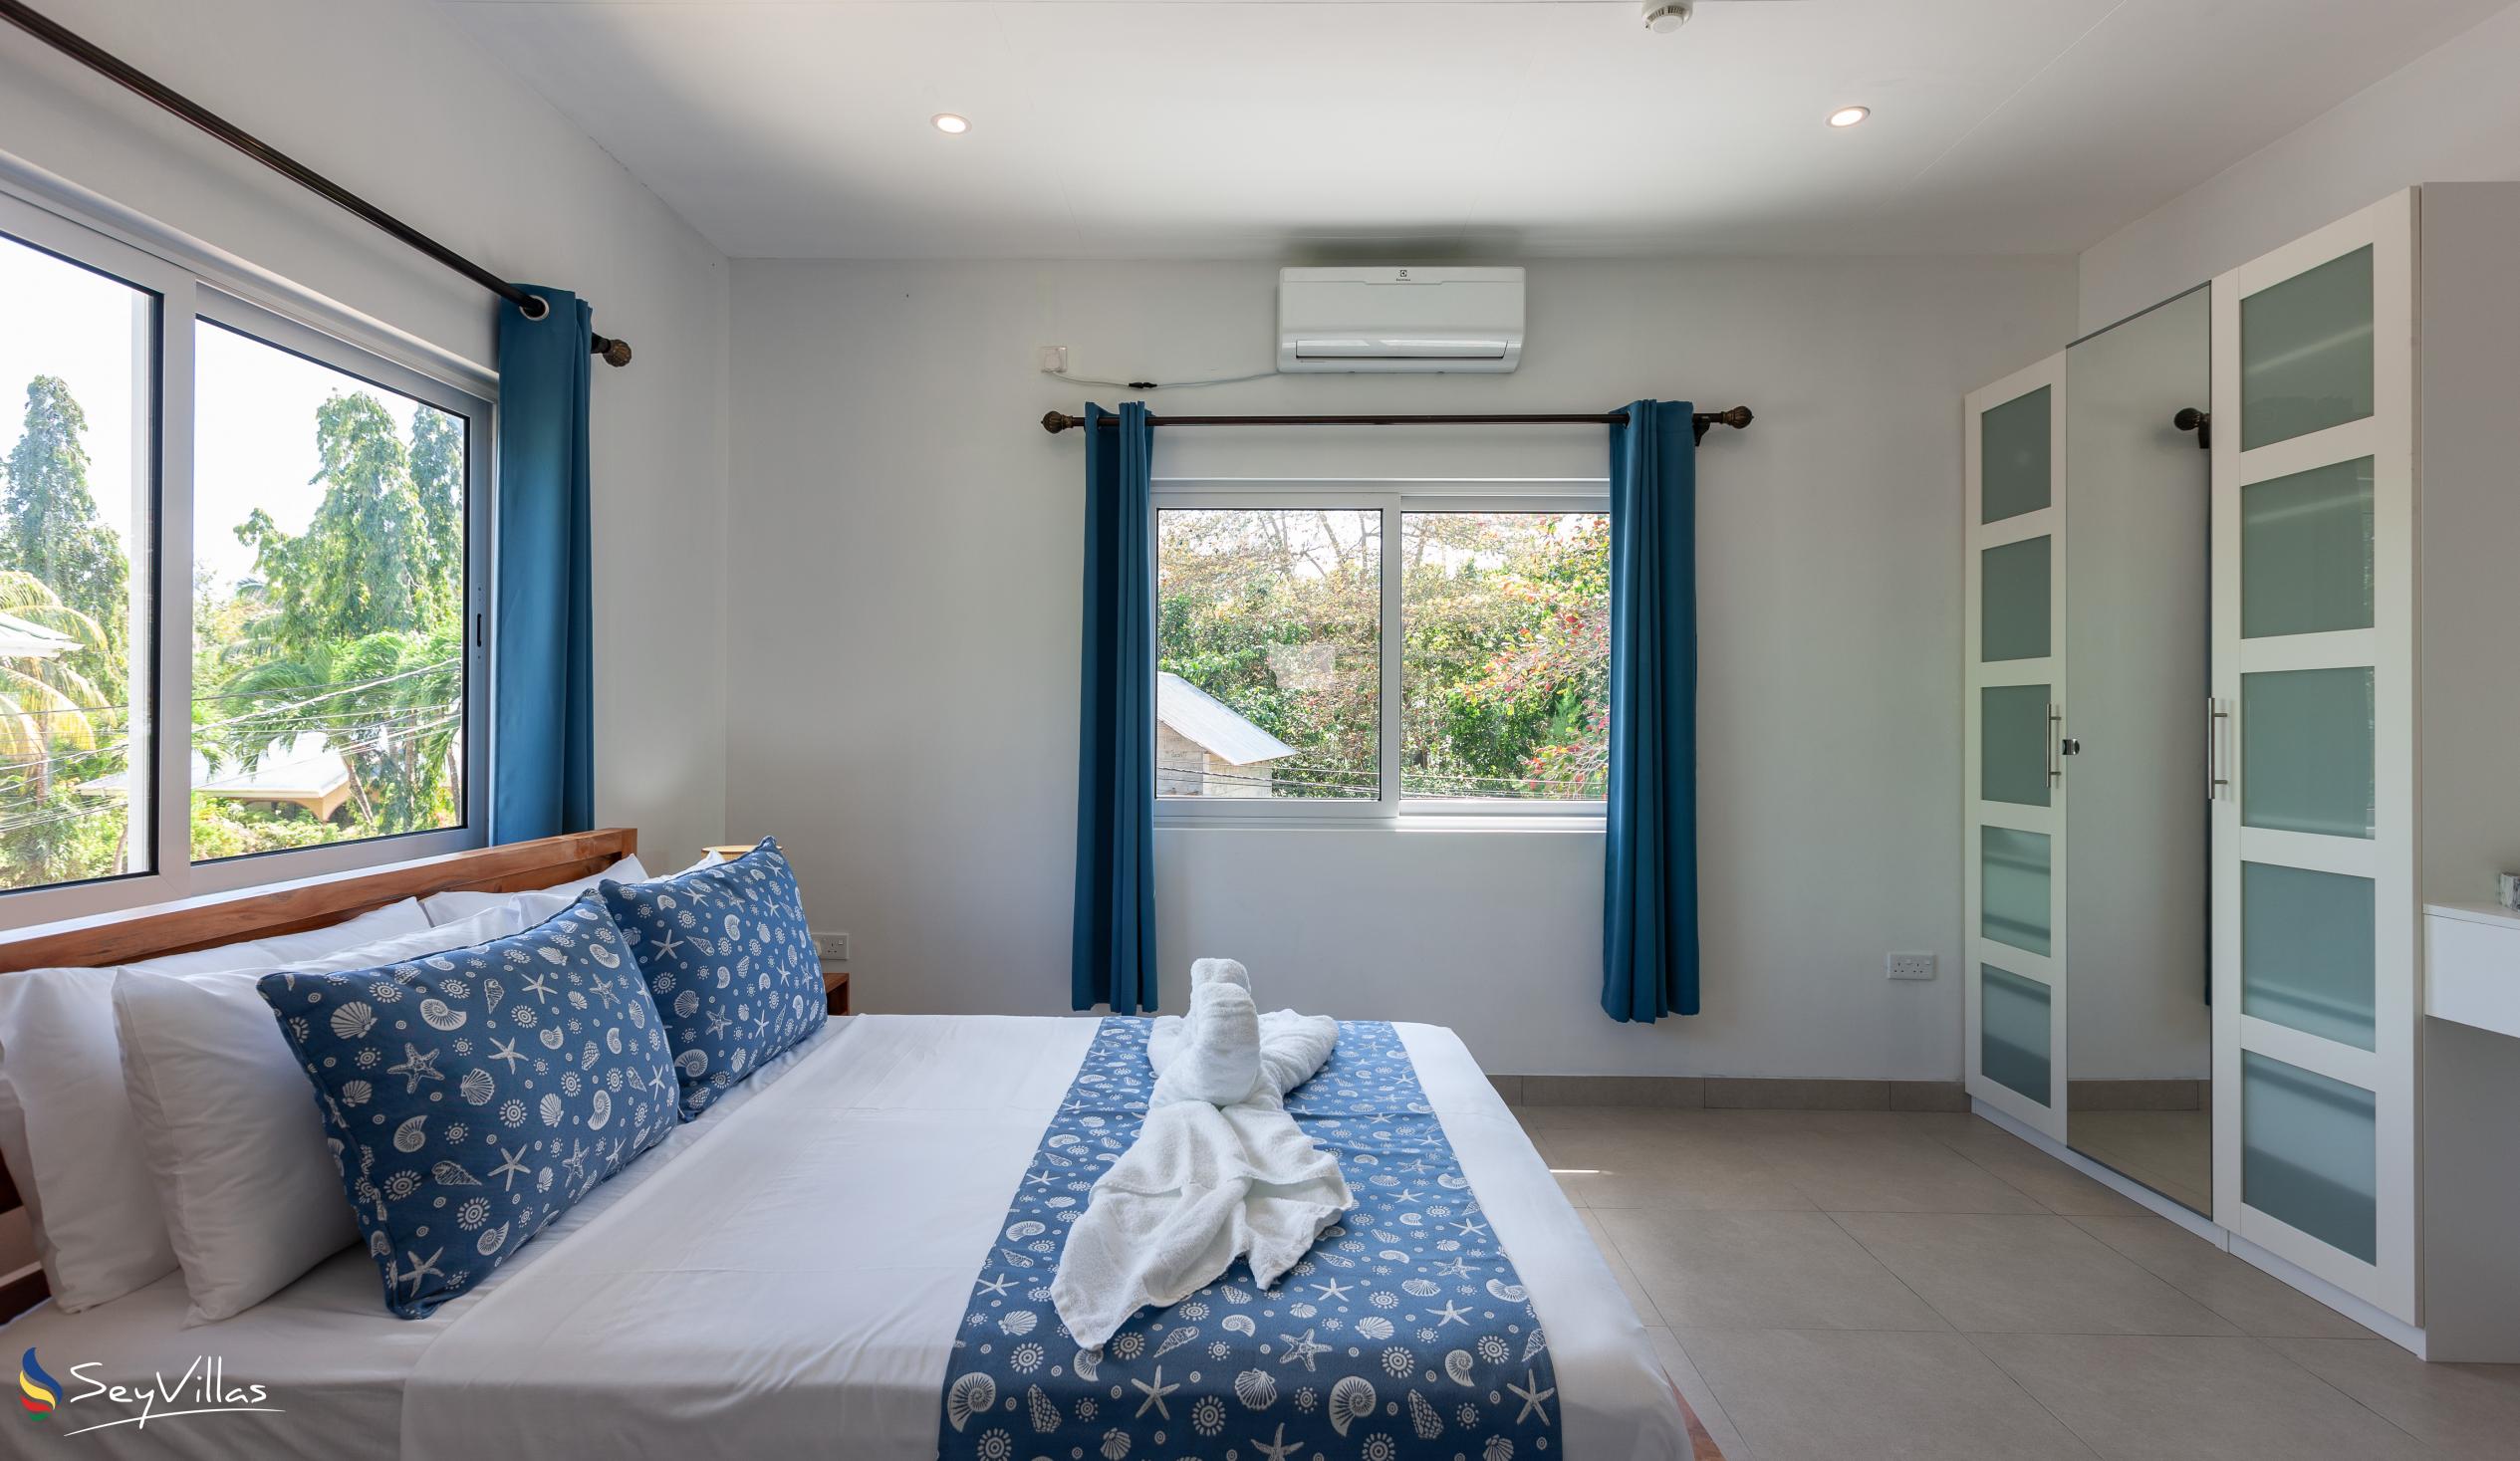 Foto 44: Maison Marie-Jeanne - Appartement 4 chambres - Praslin (Seychelles)